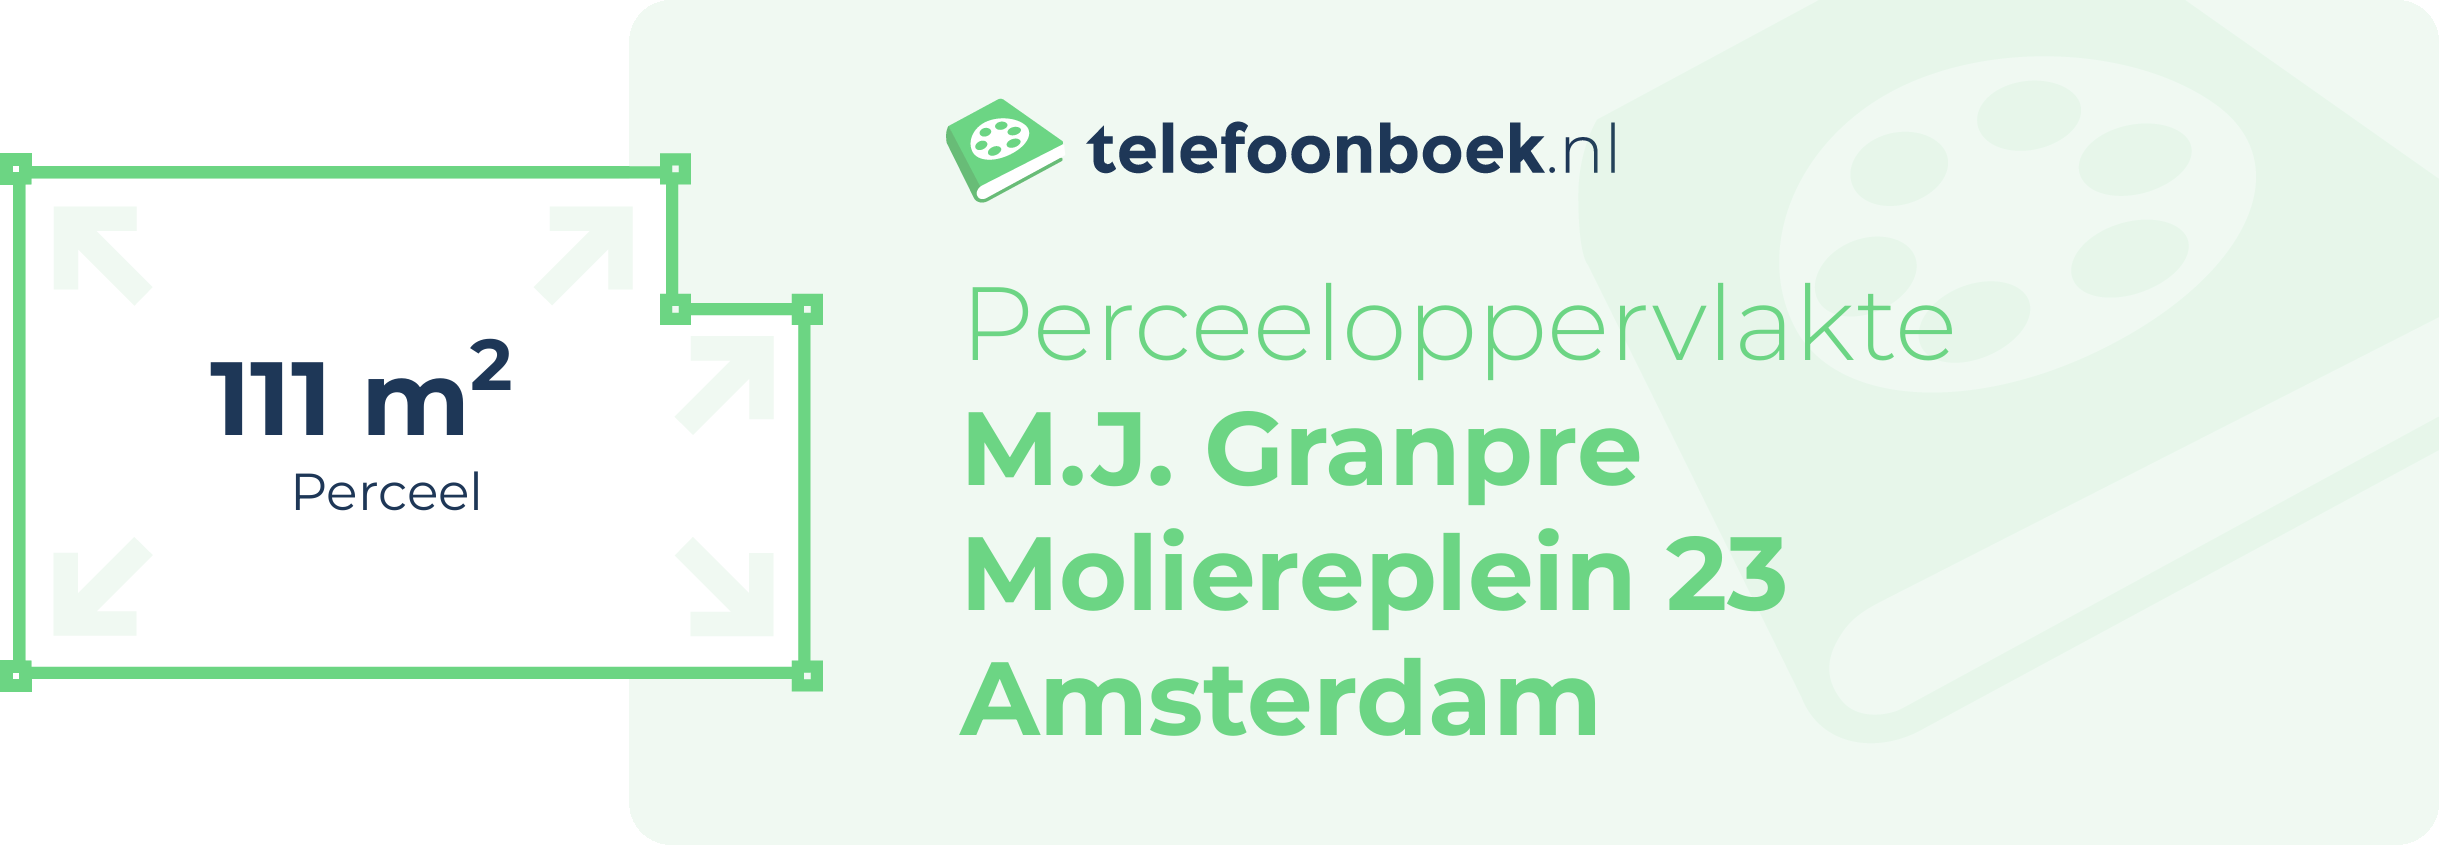 Perceeloppervlakte M.J. Granpre Moliereplein 23 Amsterdam